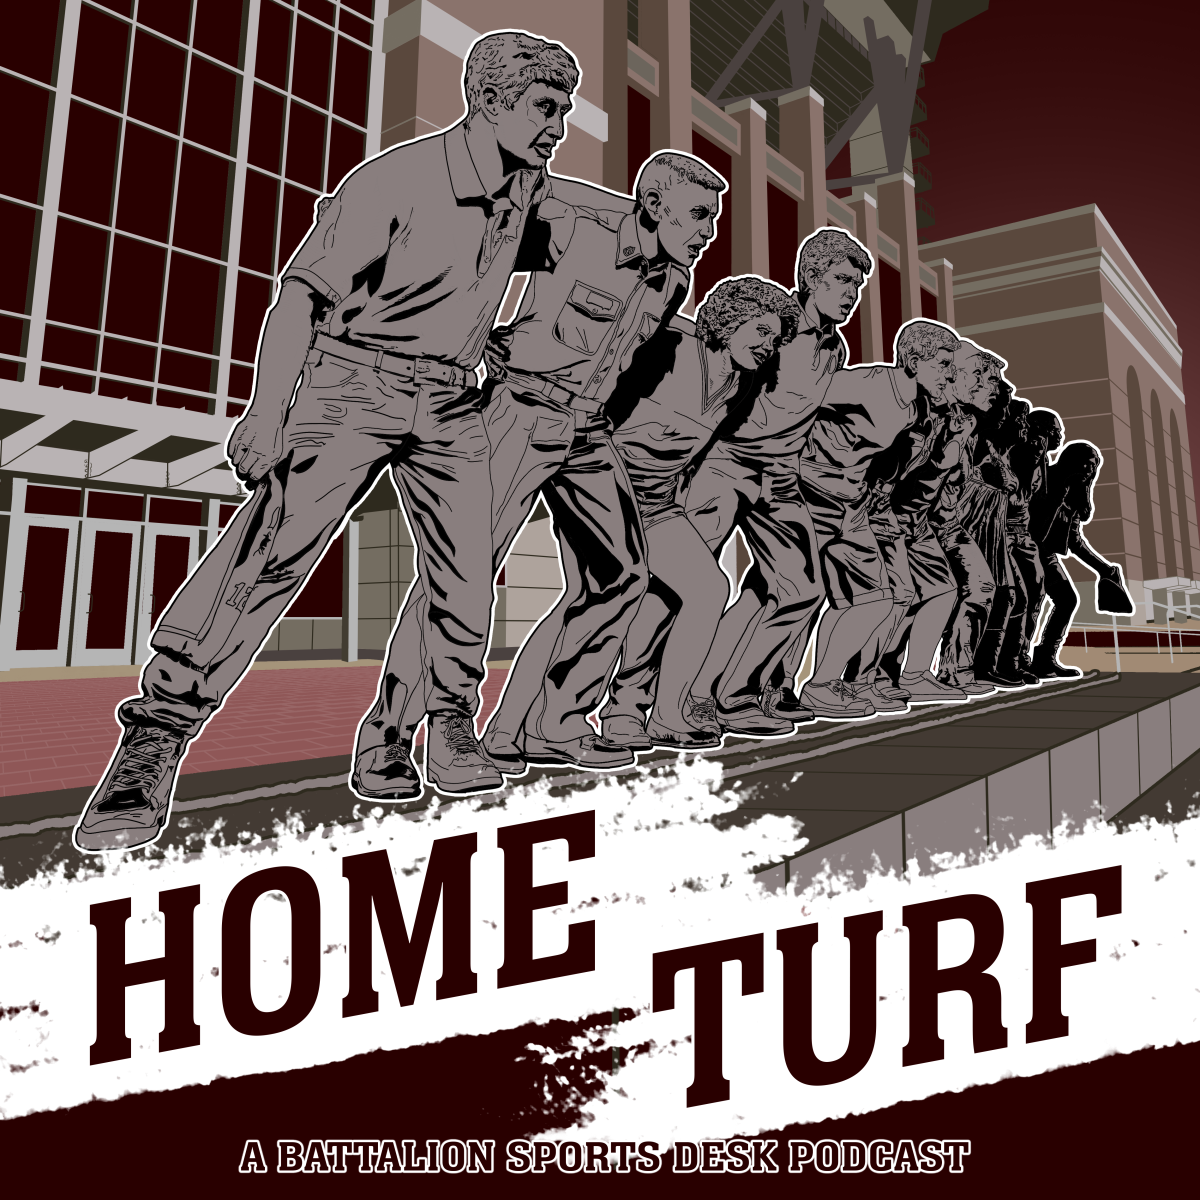 Home+Turf+podcast+logo